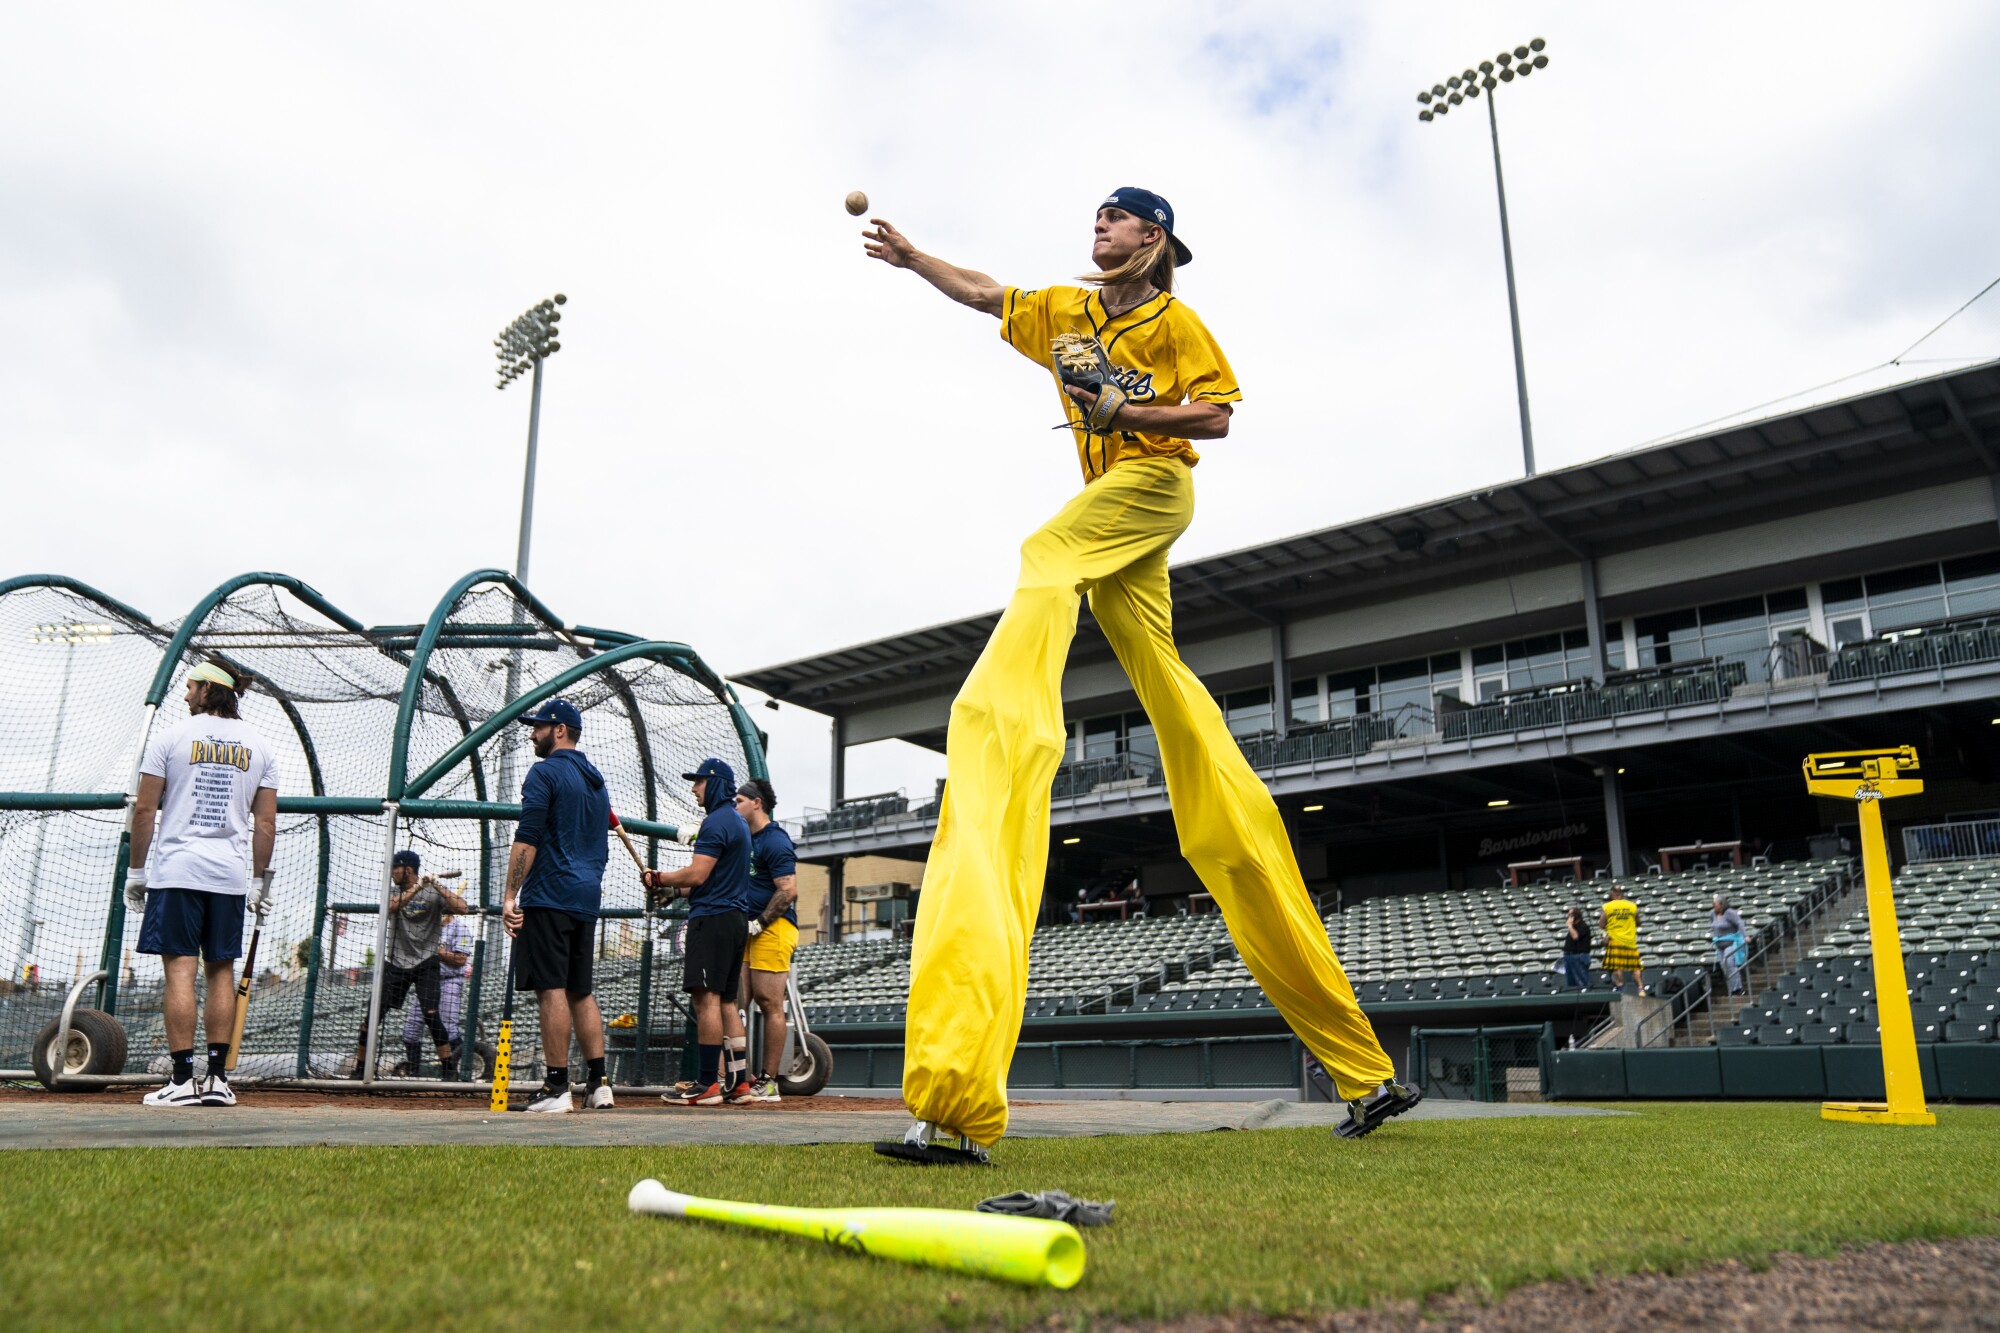 Savannah Bananas player Jacob Teston warms up while pitching on stilts during before a game.